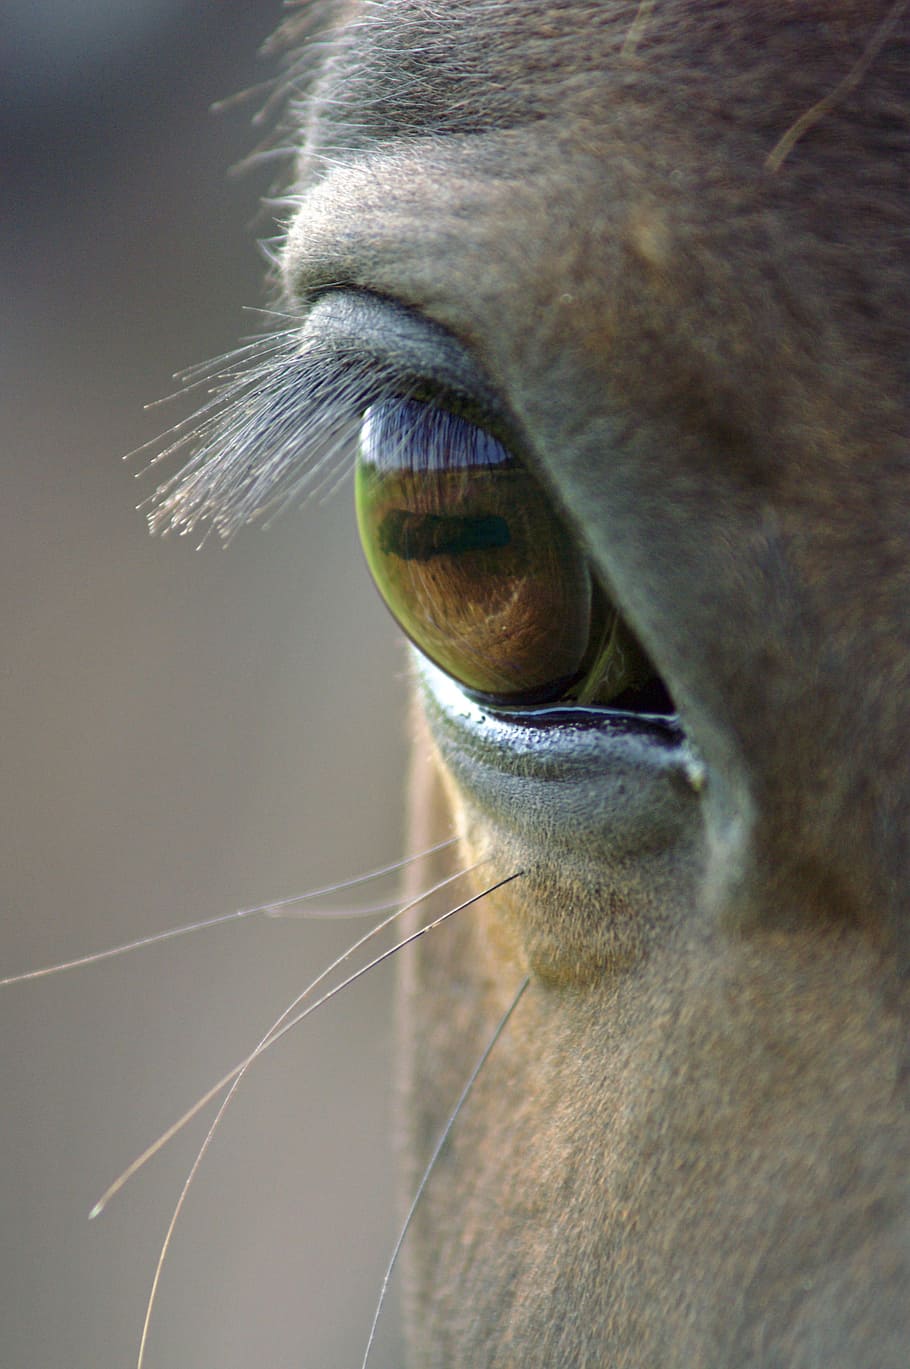 animal right eye, animal, portrait, wildlife, nature, horse eye, one animal, close-up, animal body part, eye